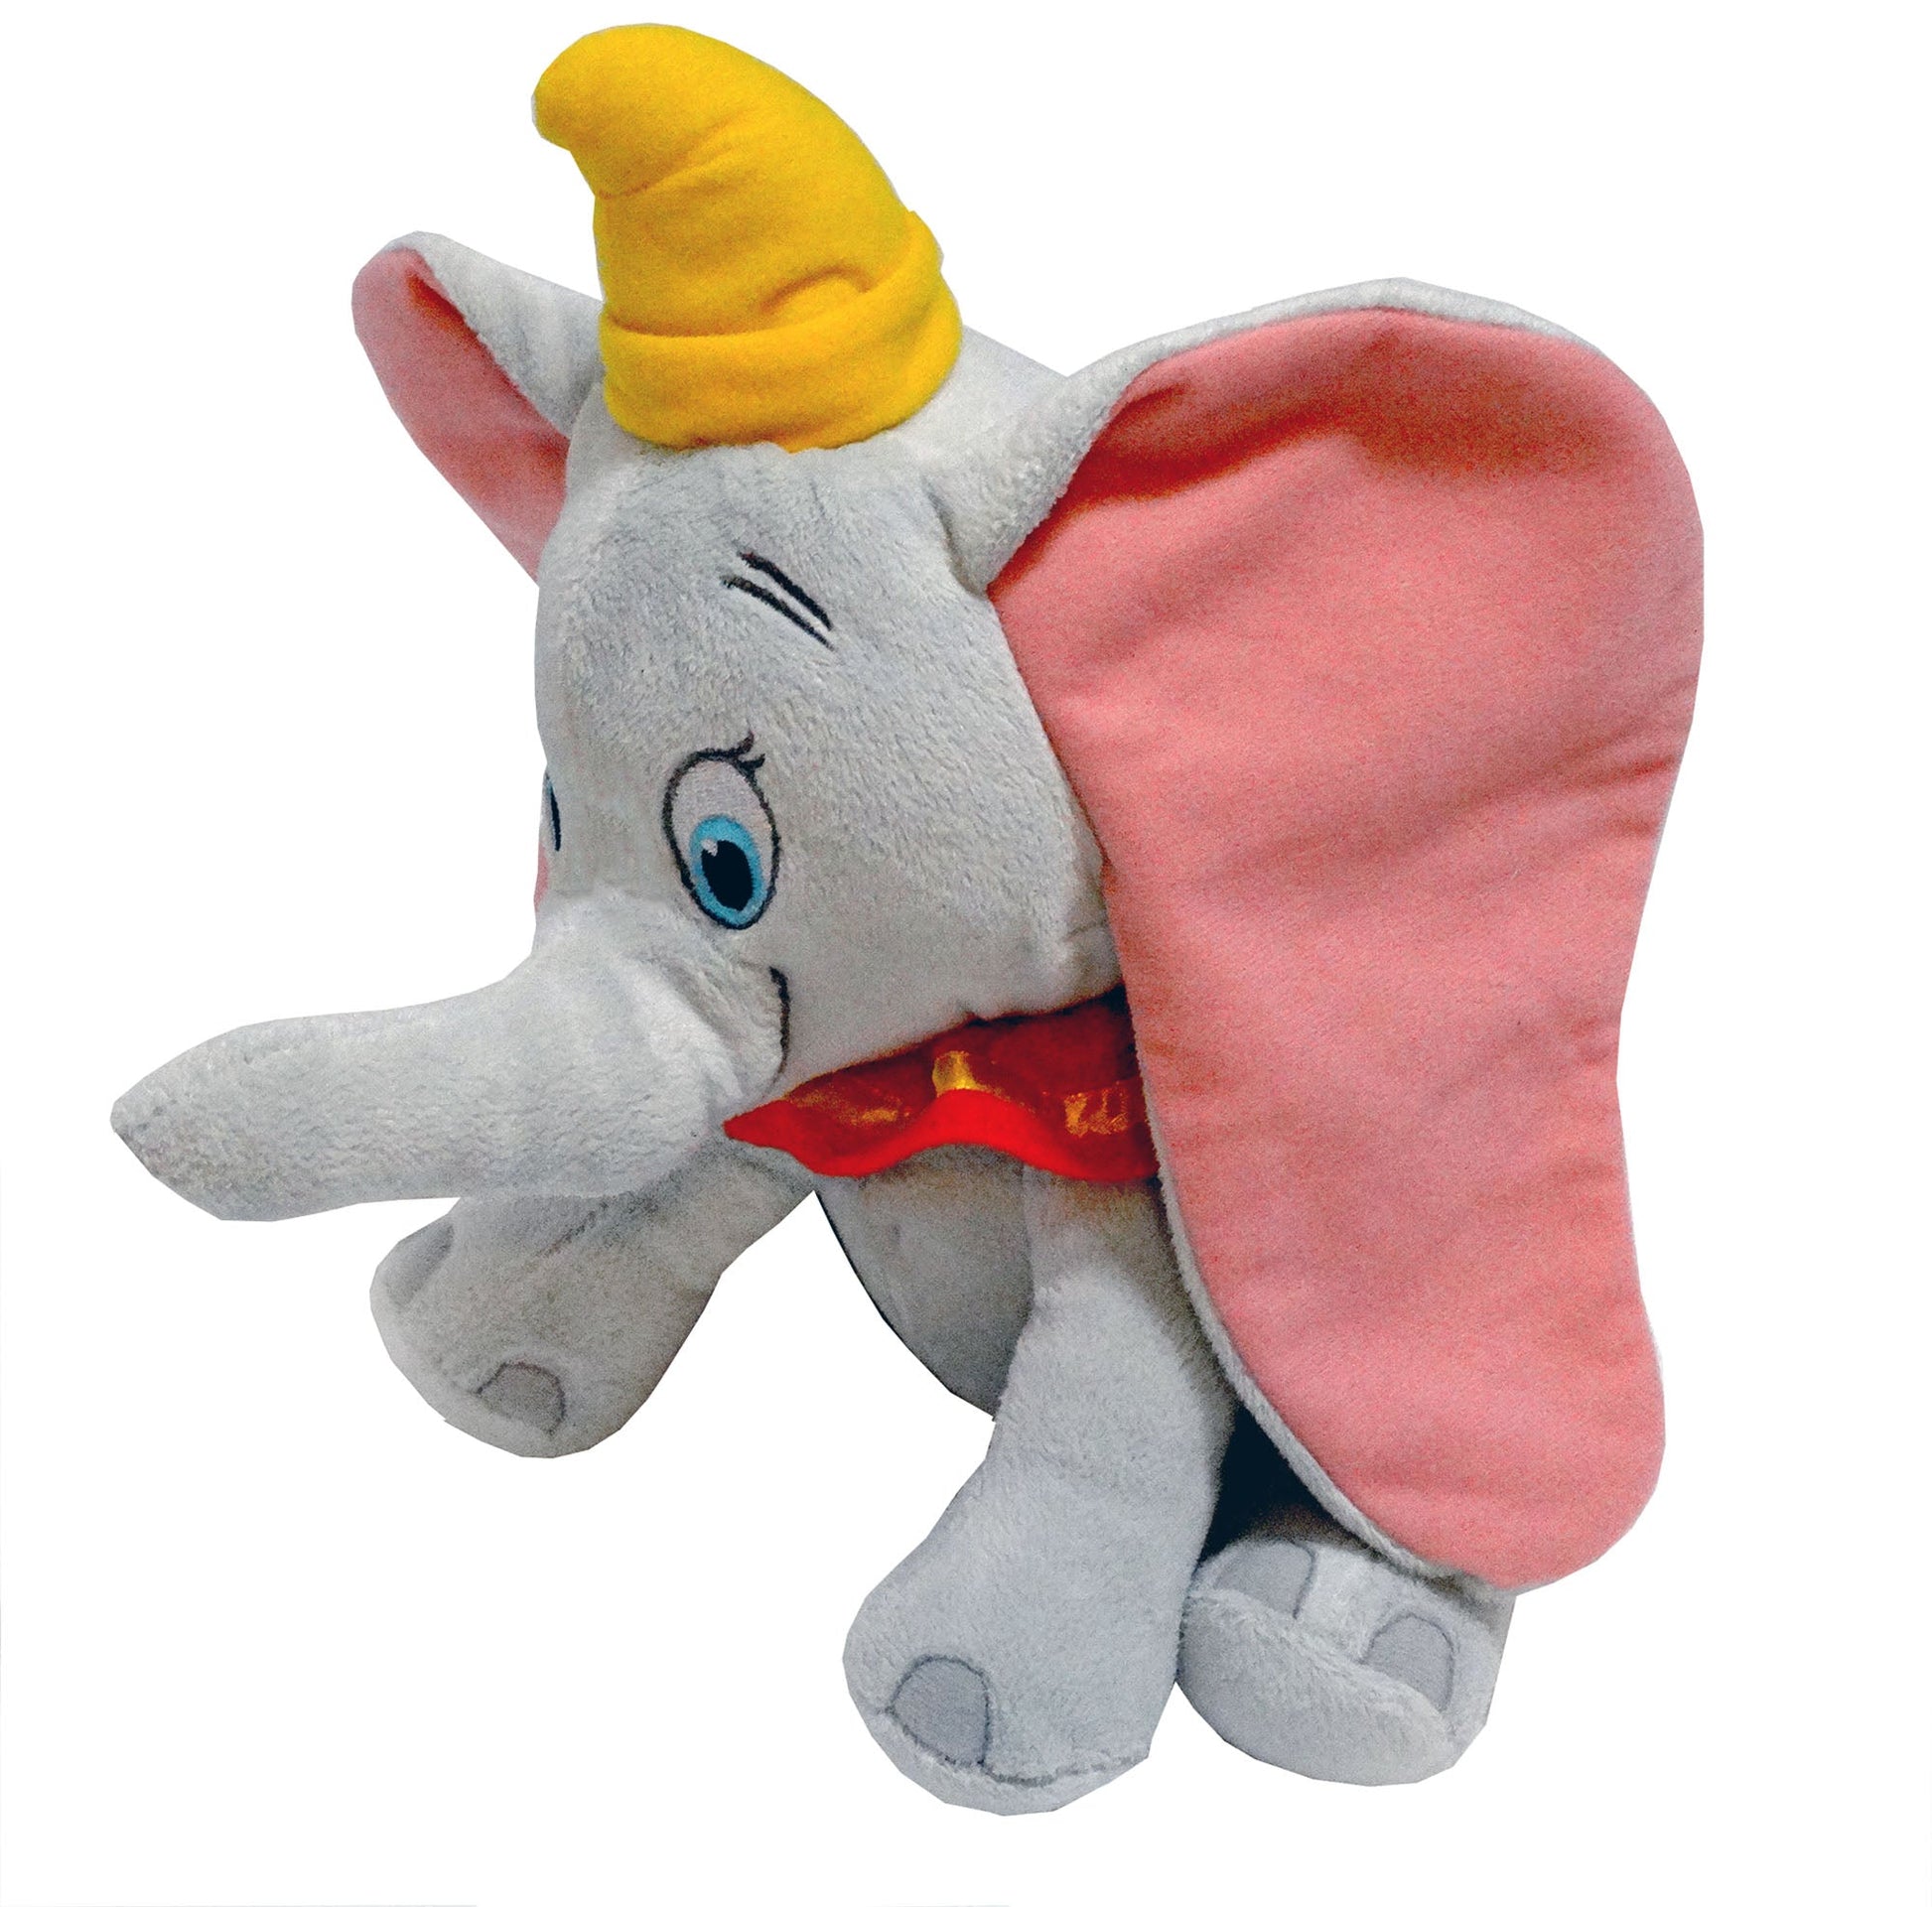 Disney-Dumbo-Plush-Stuffed-Animal, Kohls Cares